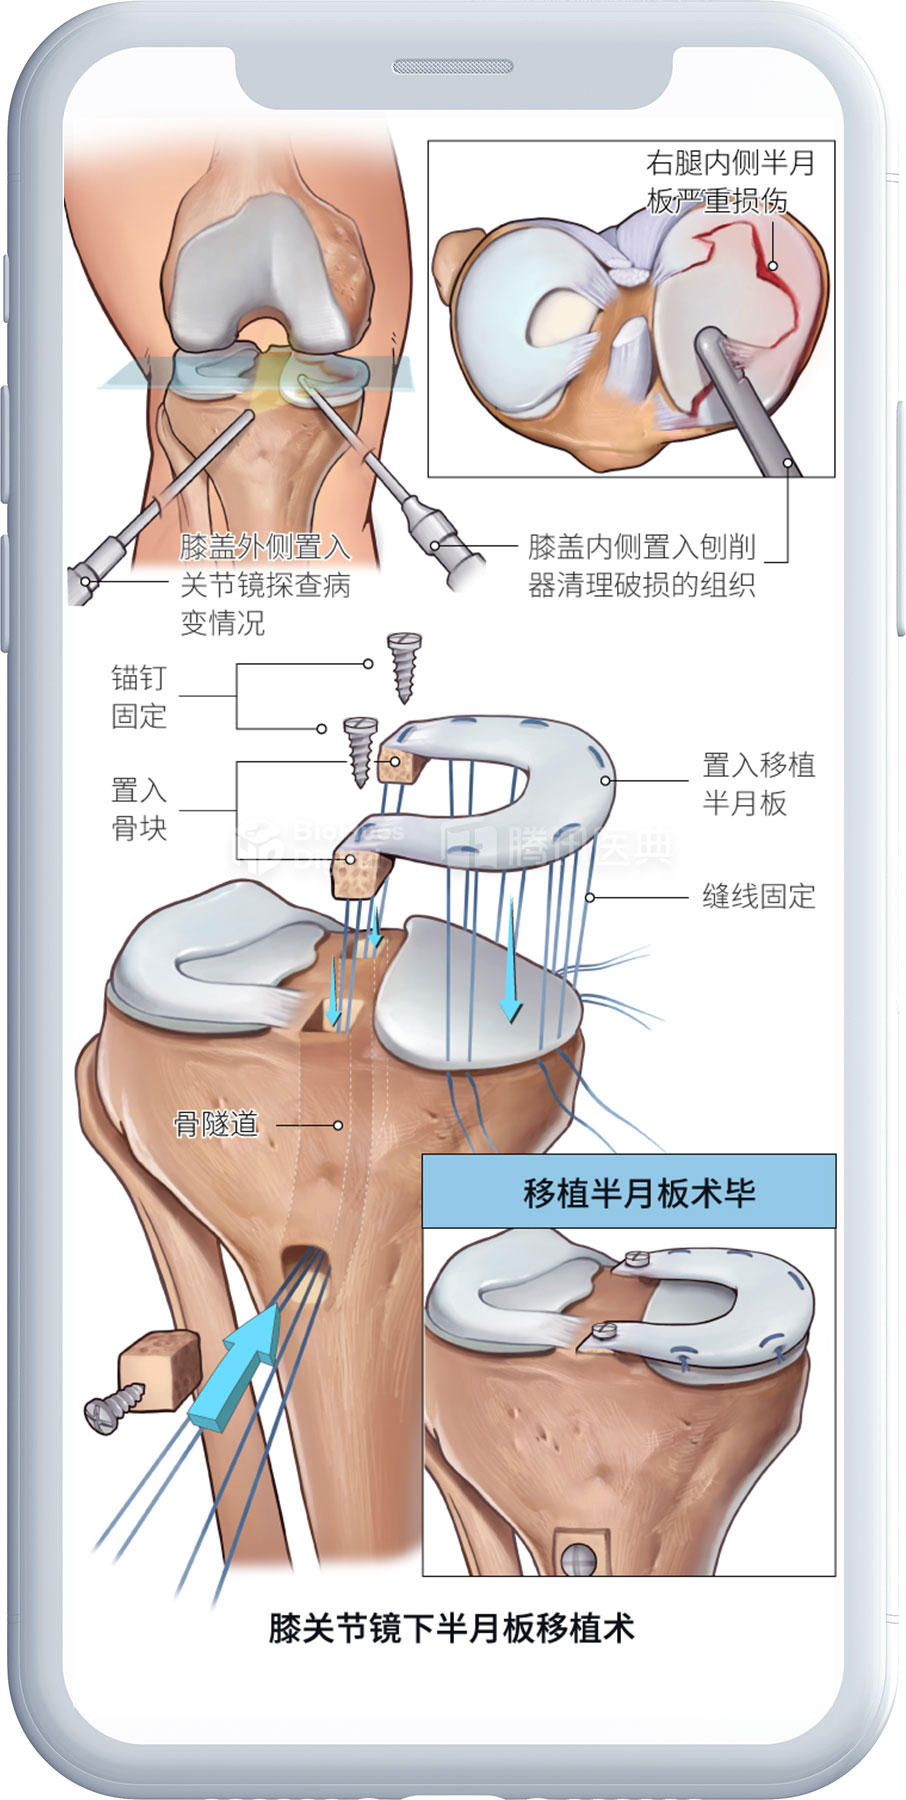 Medical illustration of transplant surgery of the meniscus-biohues digital